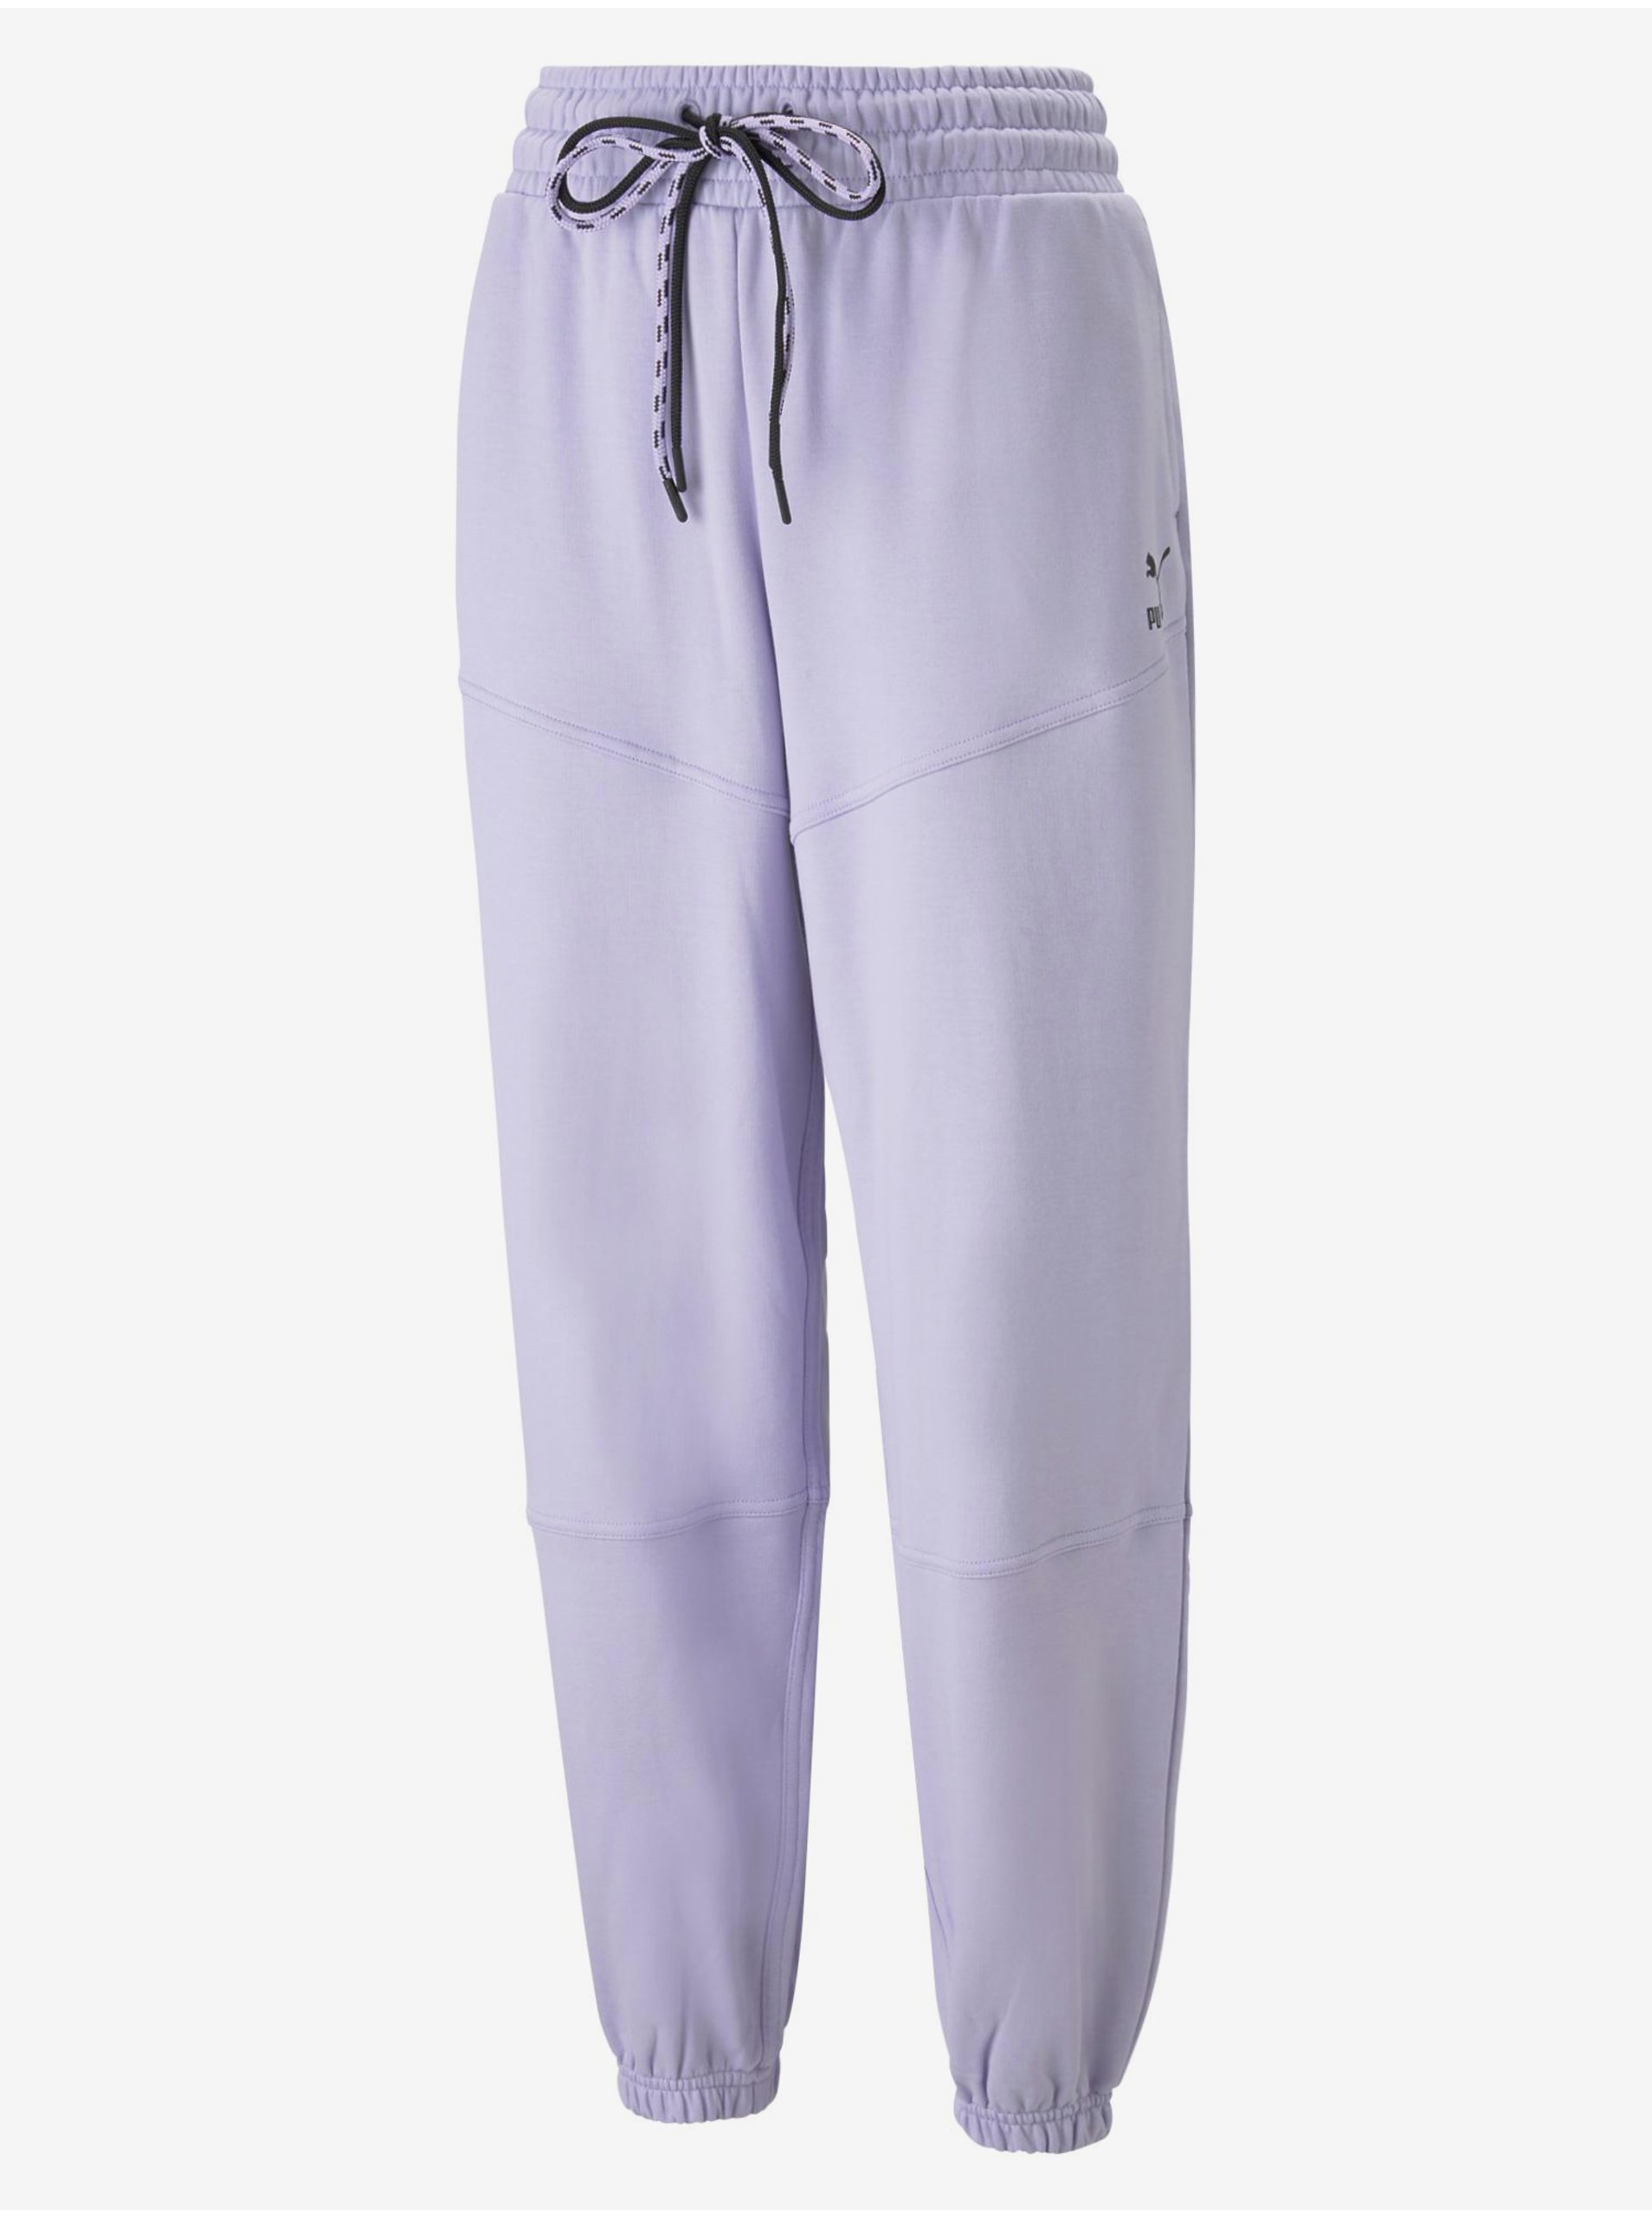 Light purple Puma Dare To women's sweatpants - Women